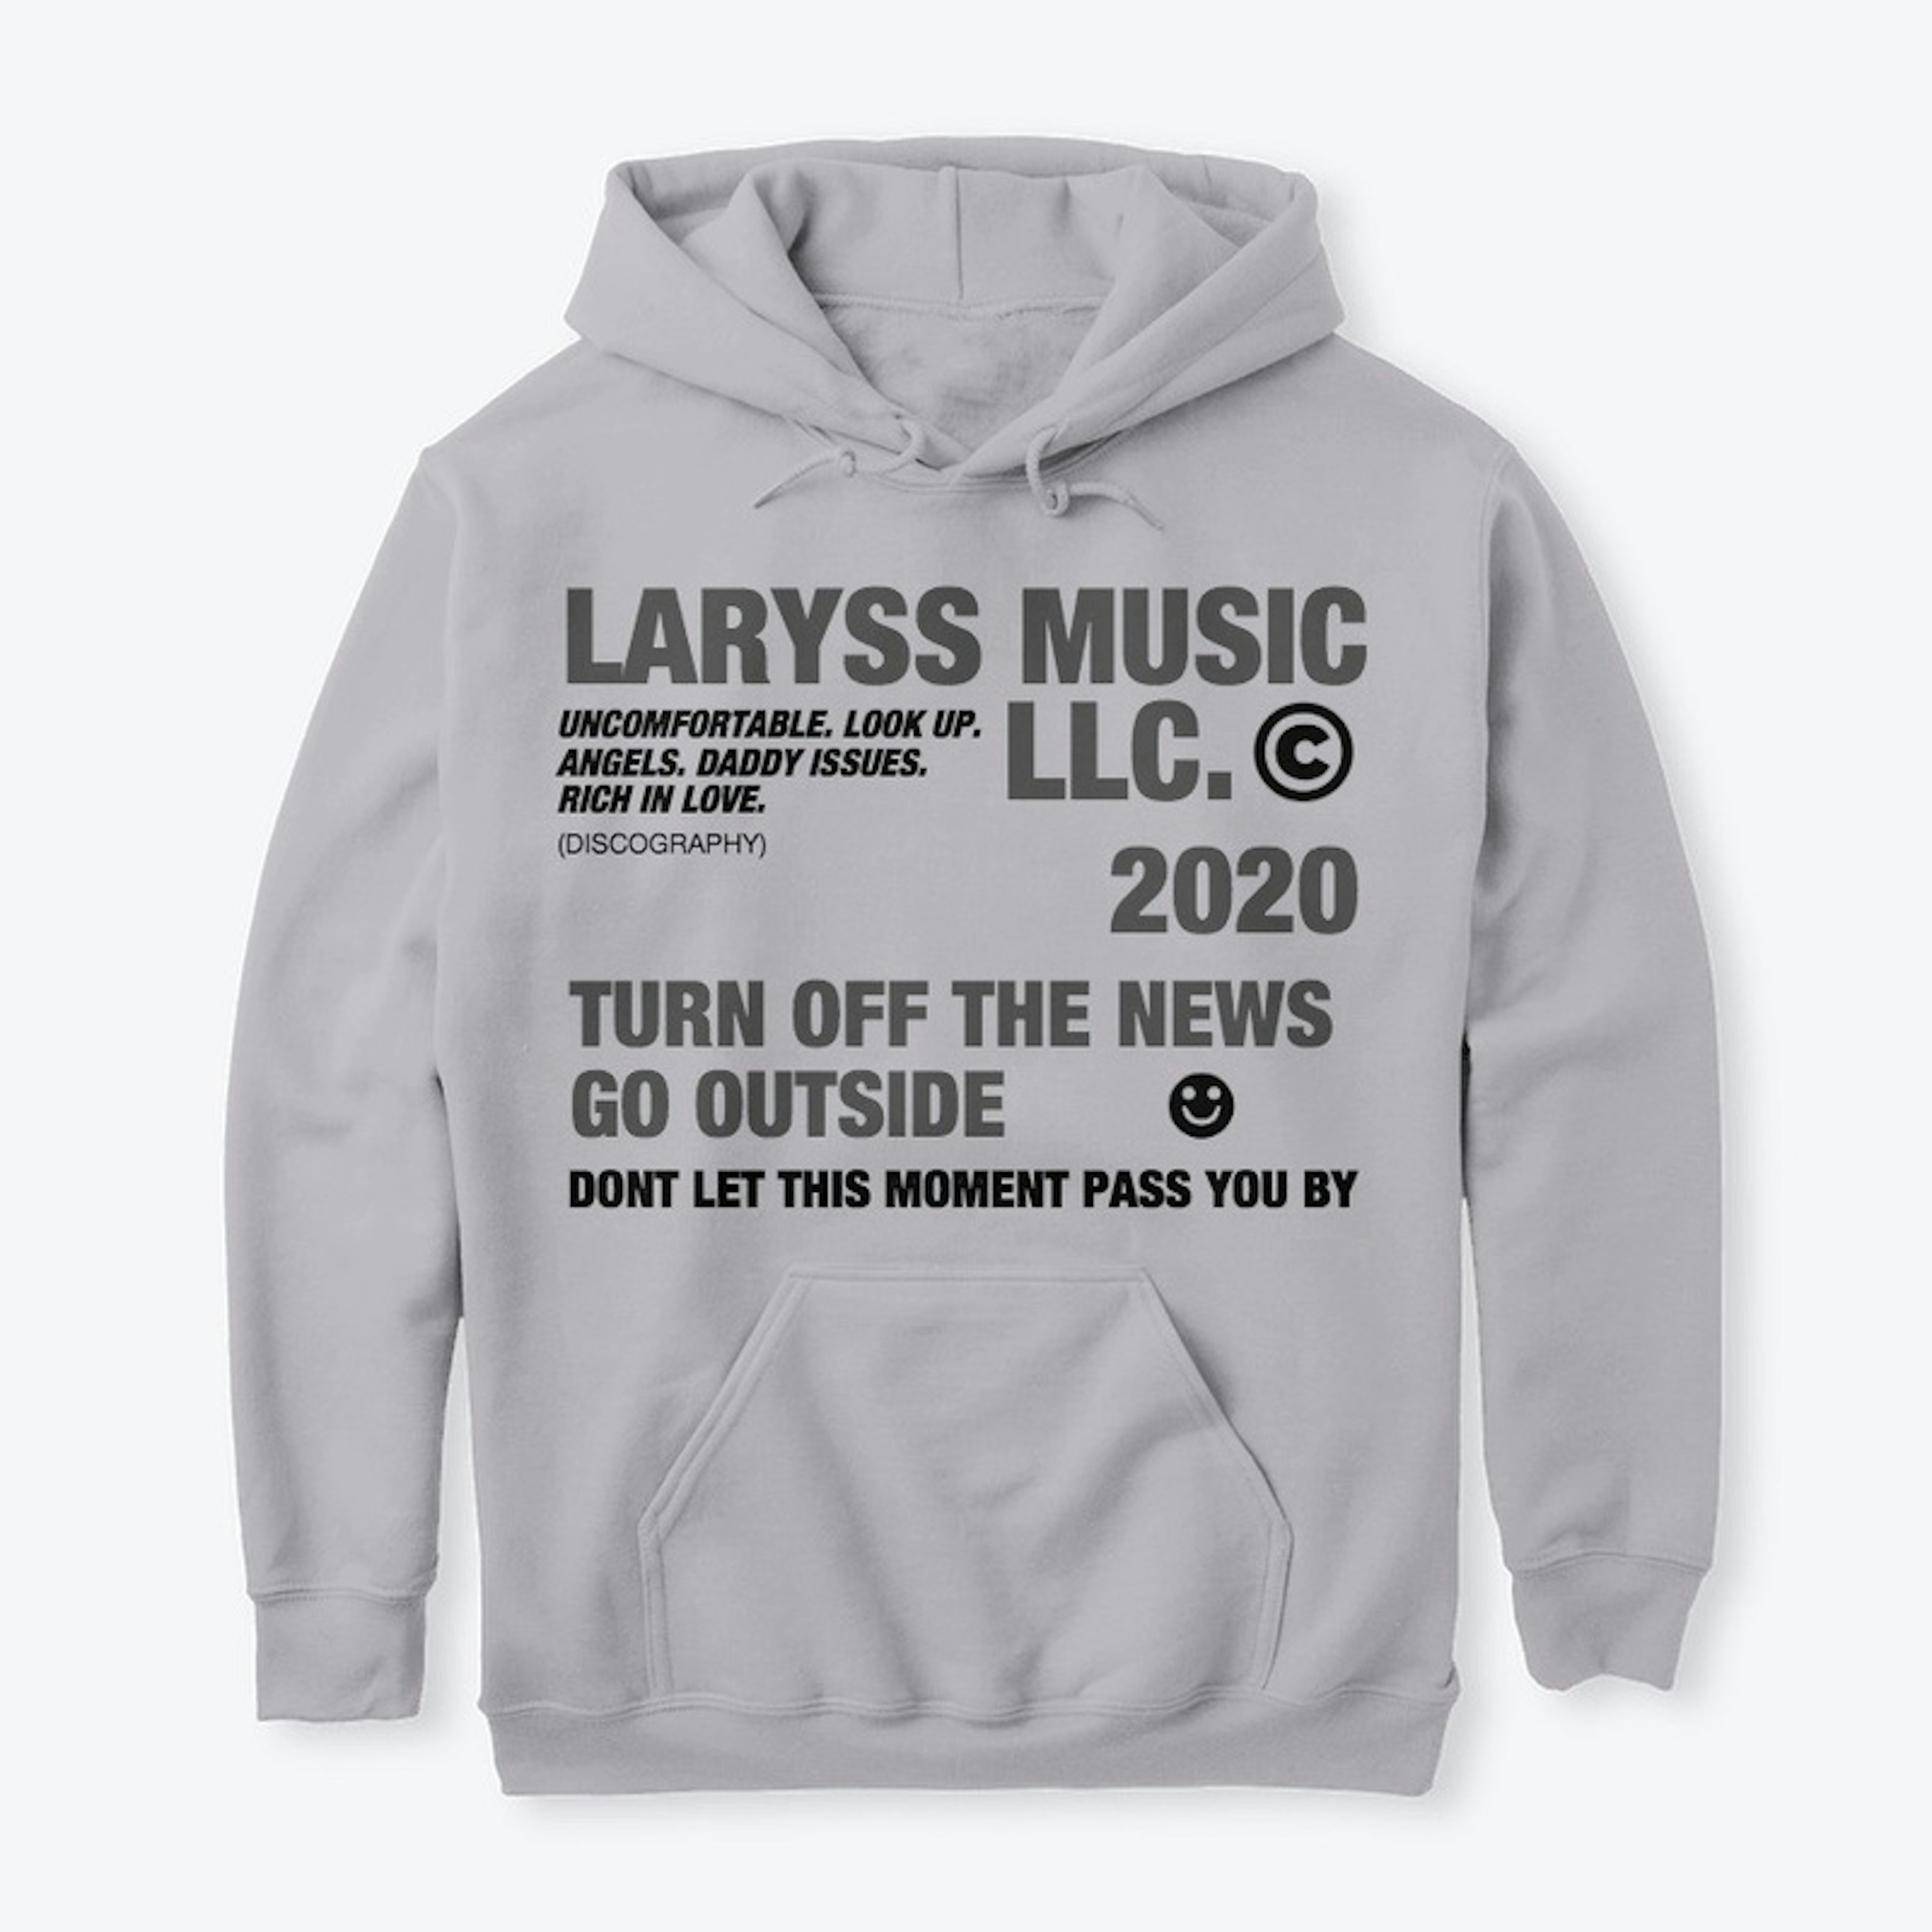 LARYSS MUSIC LLC HOODIE